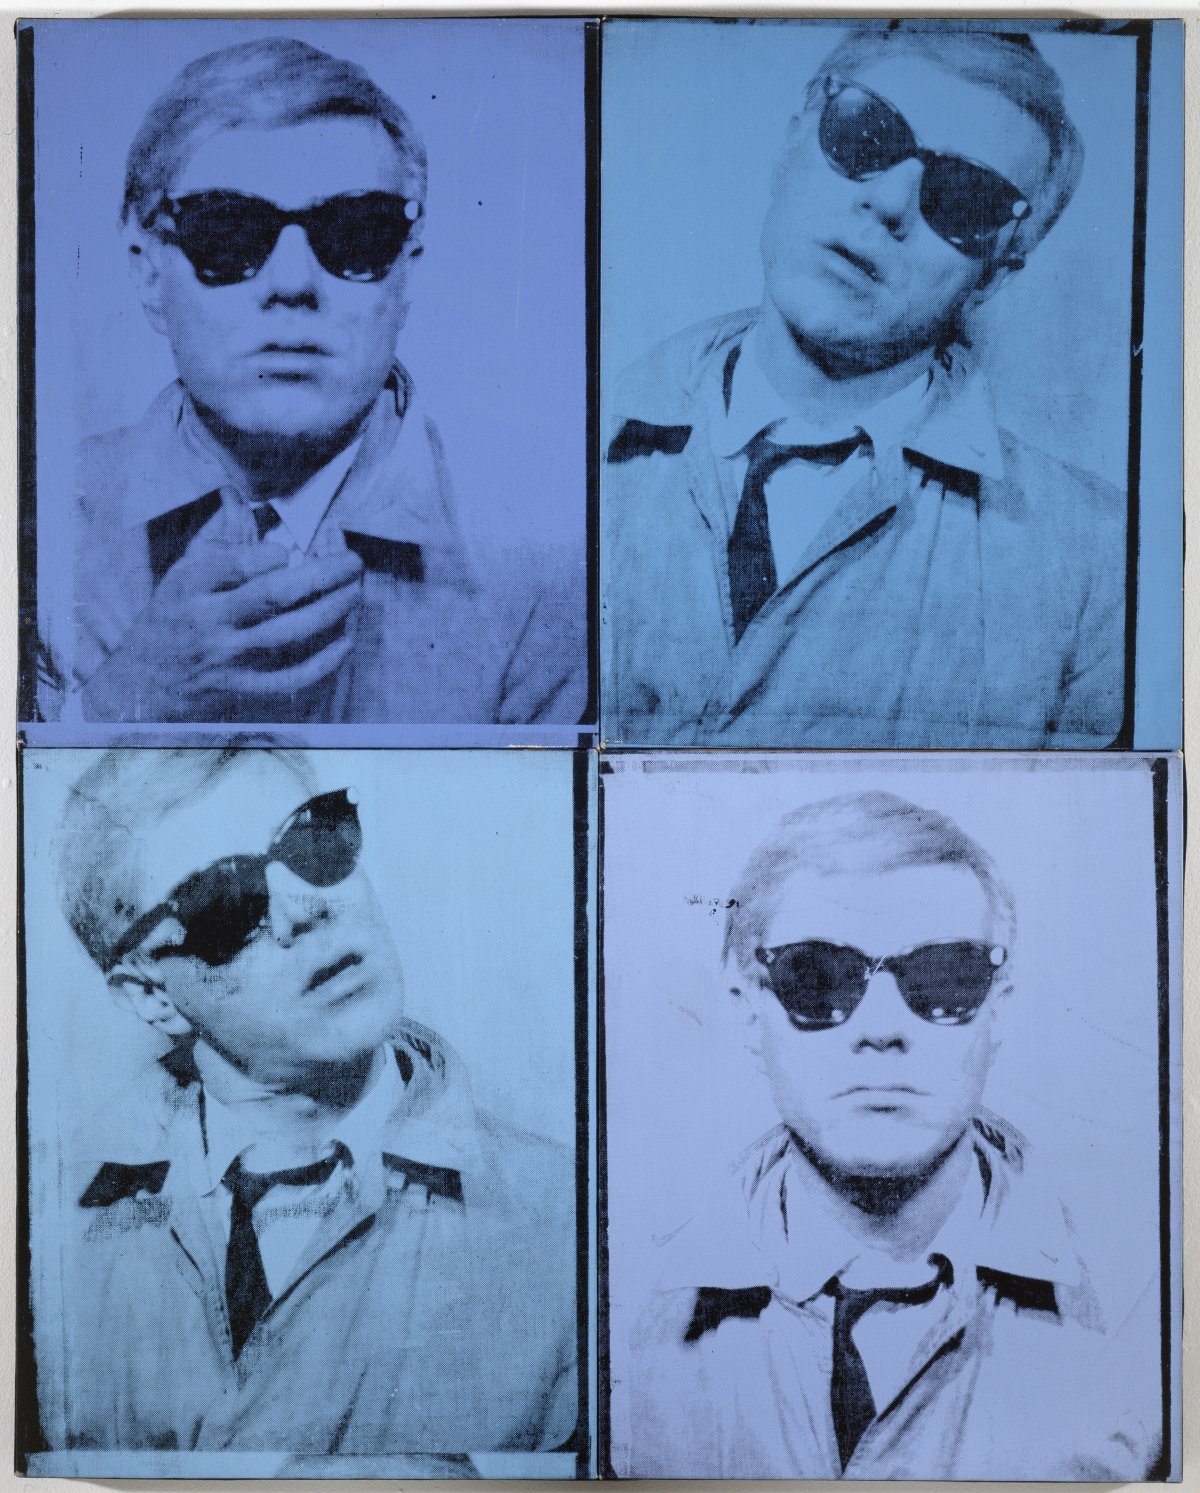 Andy Warhol, Self-Portrait, 1963-1964